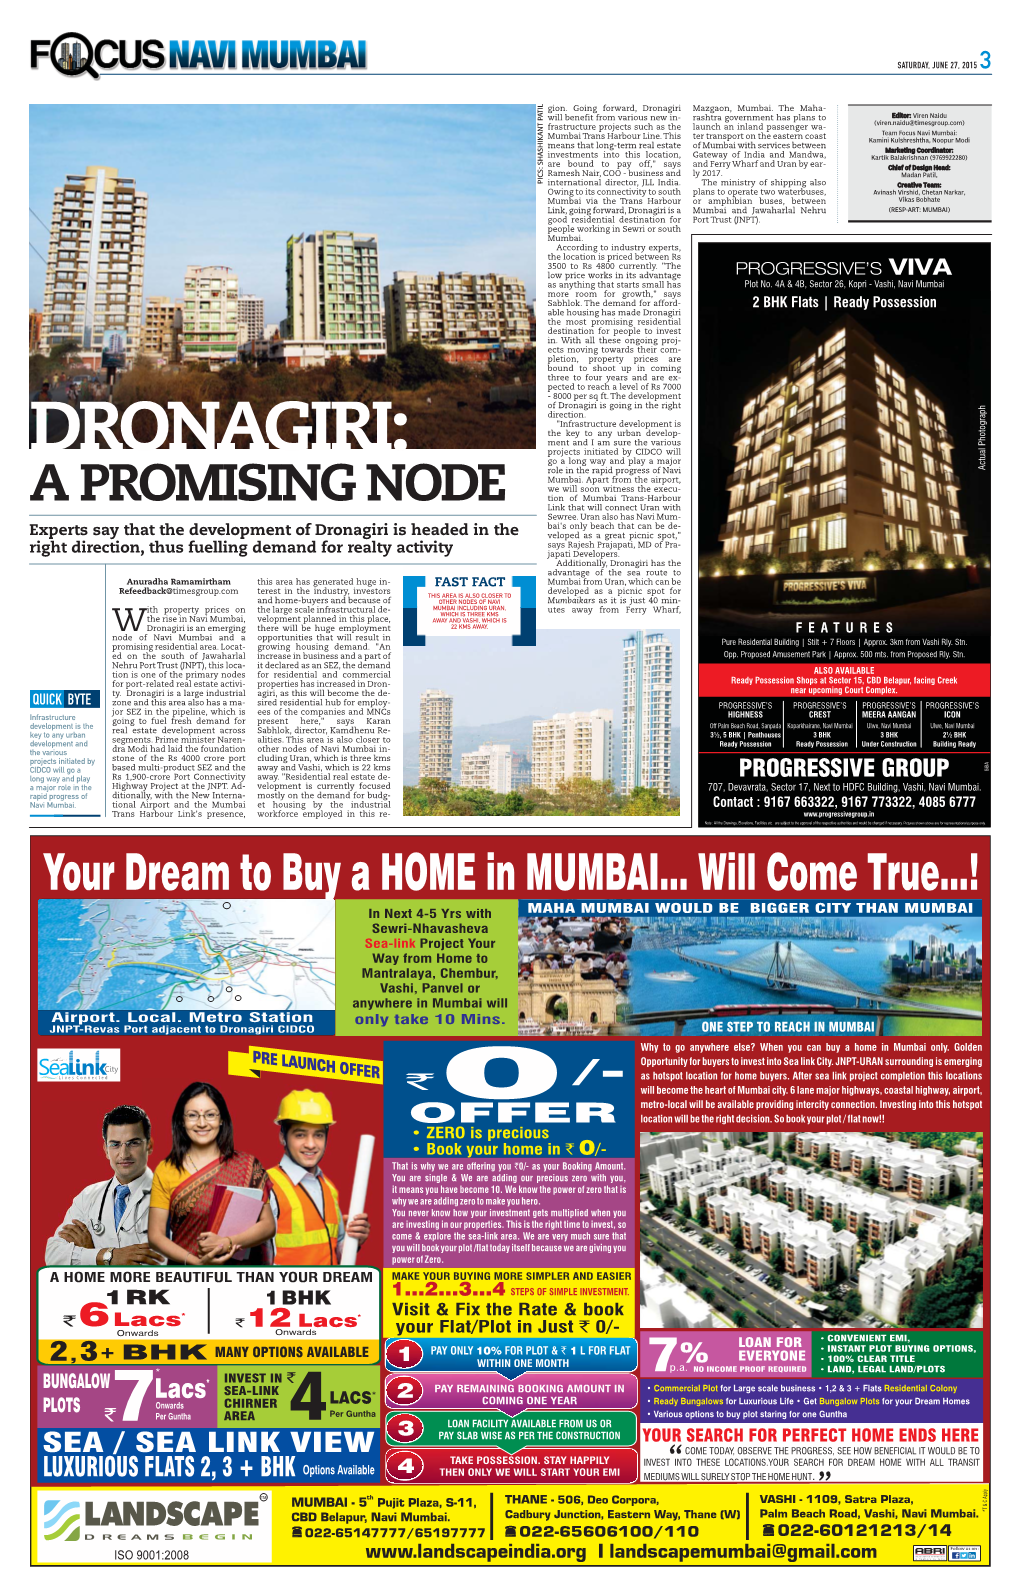 DRONAGIRI: Go a Long Way and Play a Major Role in the Rapid Progress of Navi Mumbai